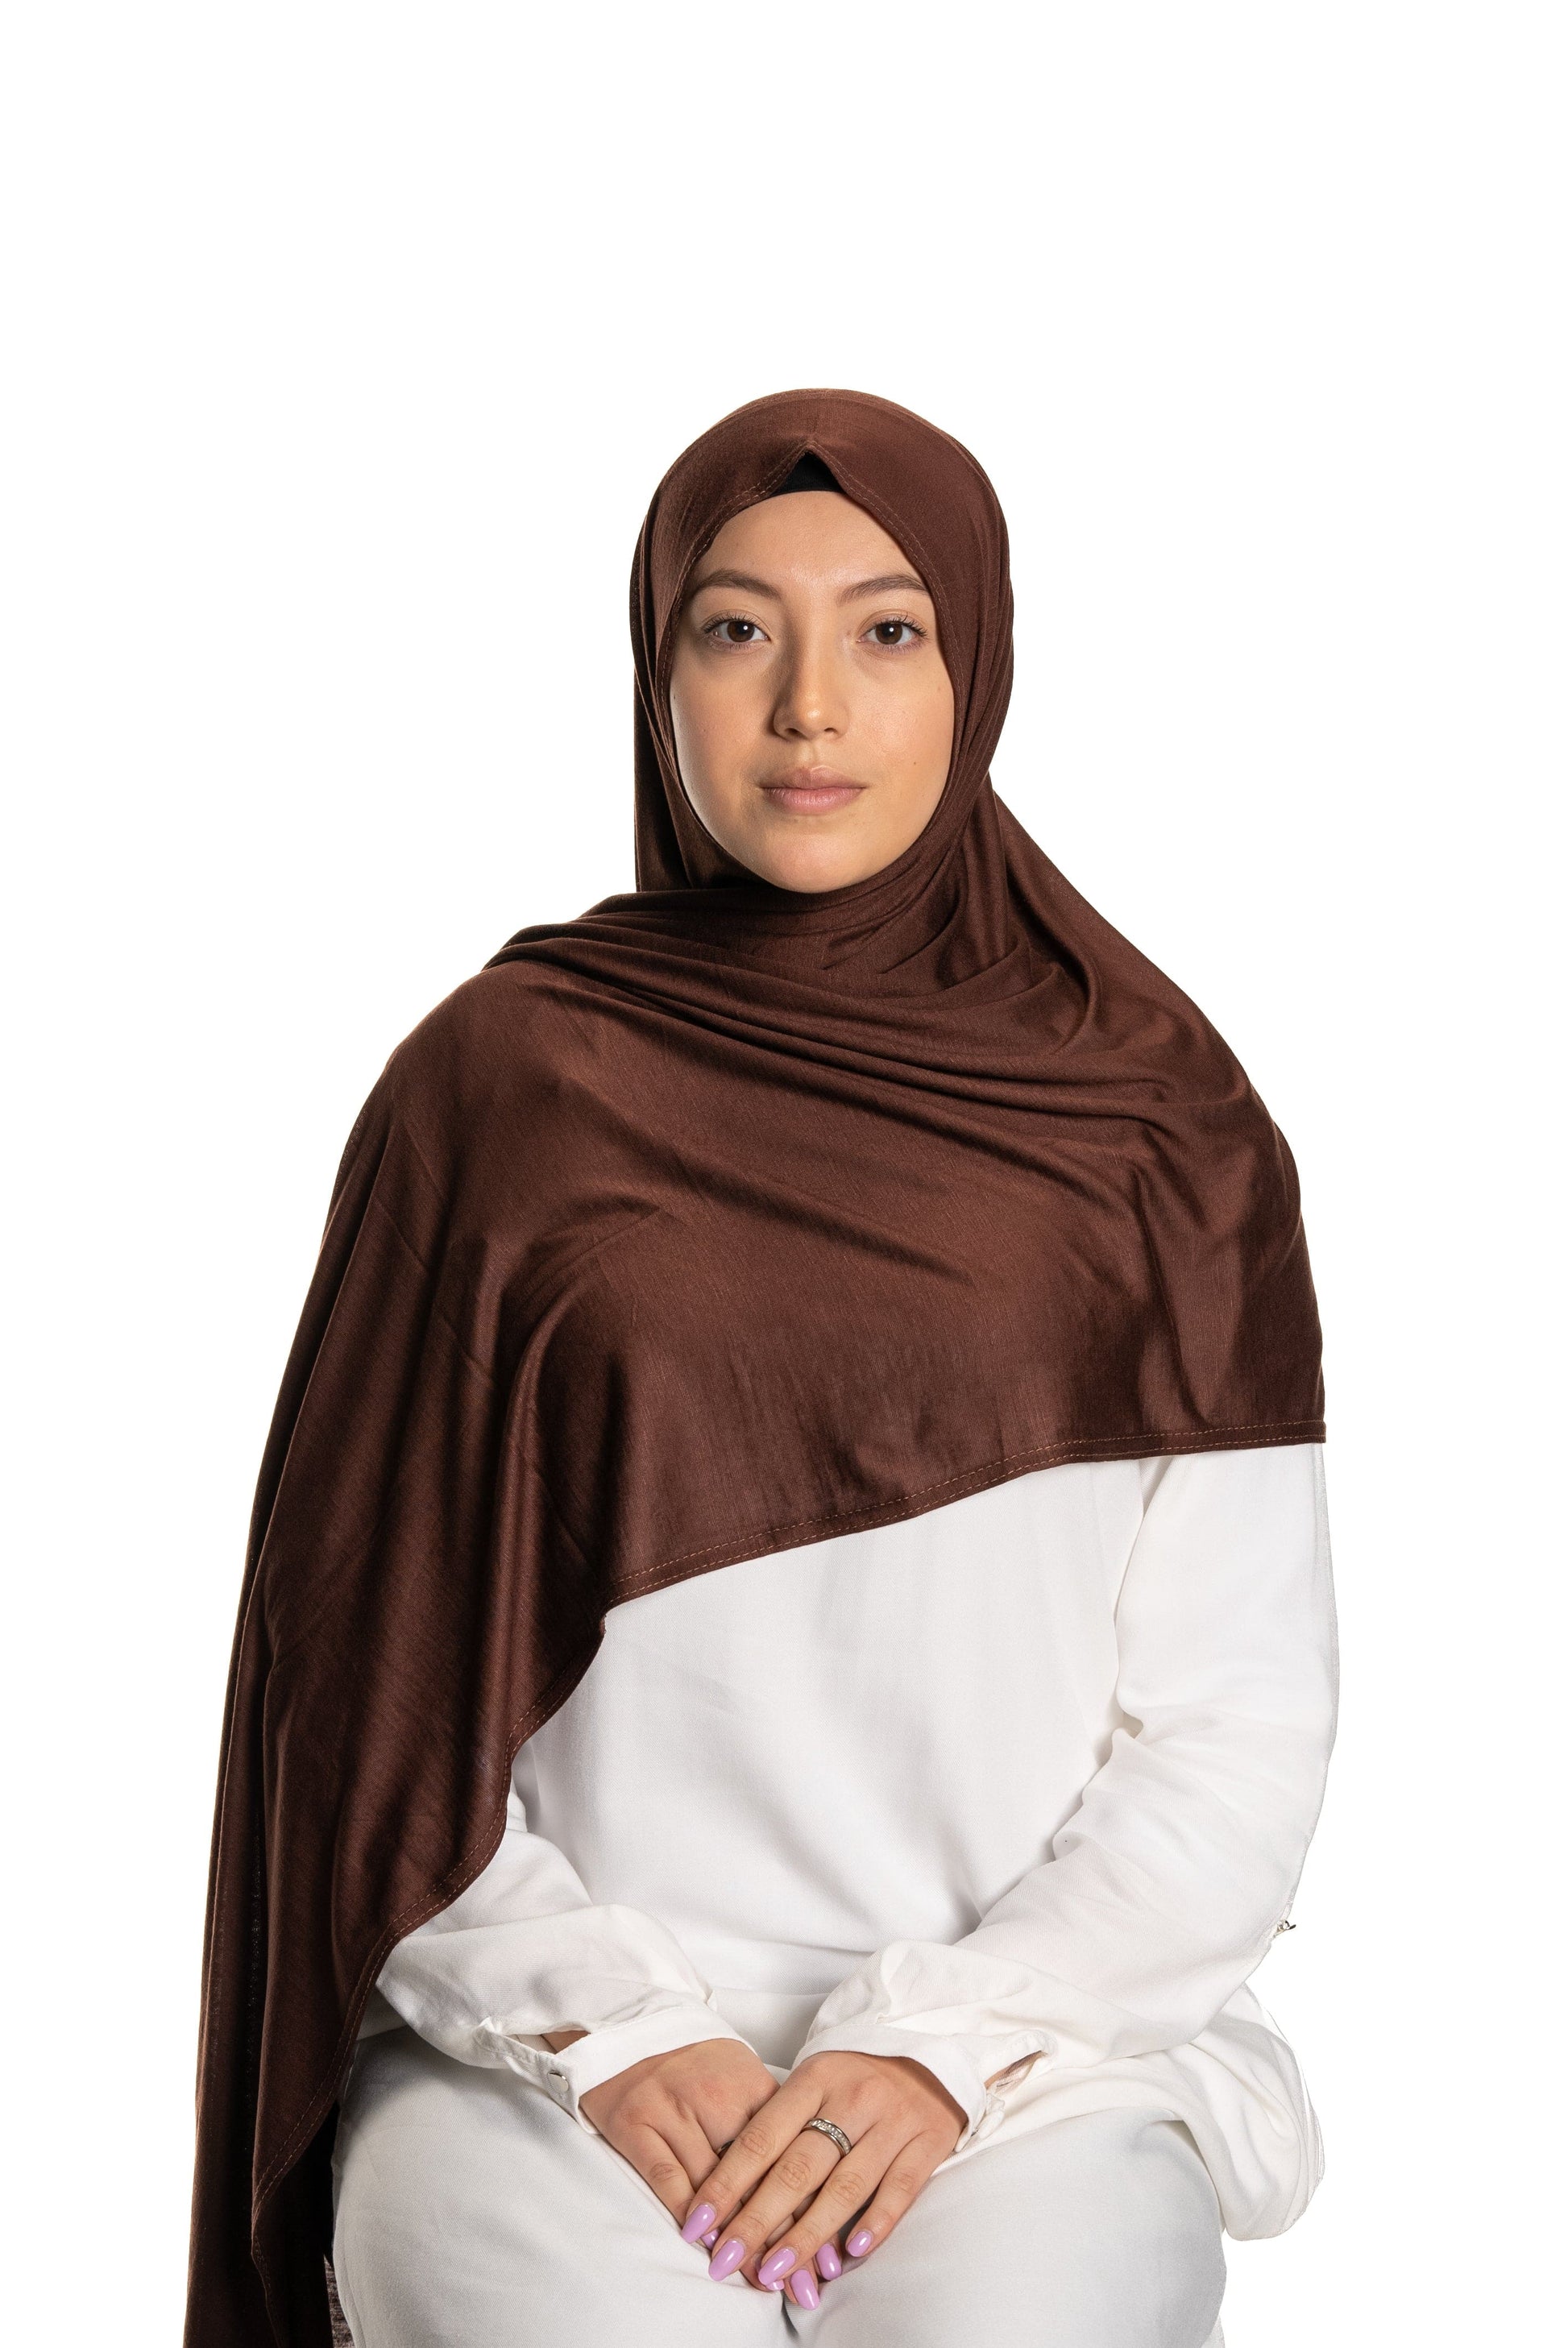 Jolie Nisa Hijab Mocha Brown Premium Slip-on Jersey Instant Head Scarf Wrap for Effortless and Stylish Hijab Wear Premium Slip-on instant Jersey Head Scarf Wrap for Effortless and Stylish Hijab Wear!